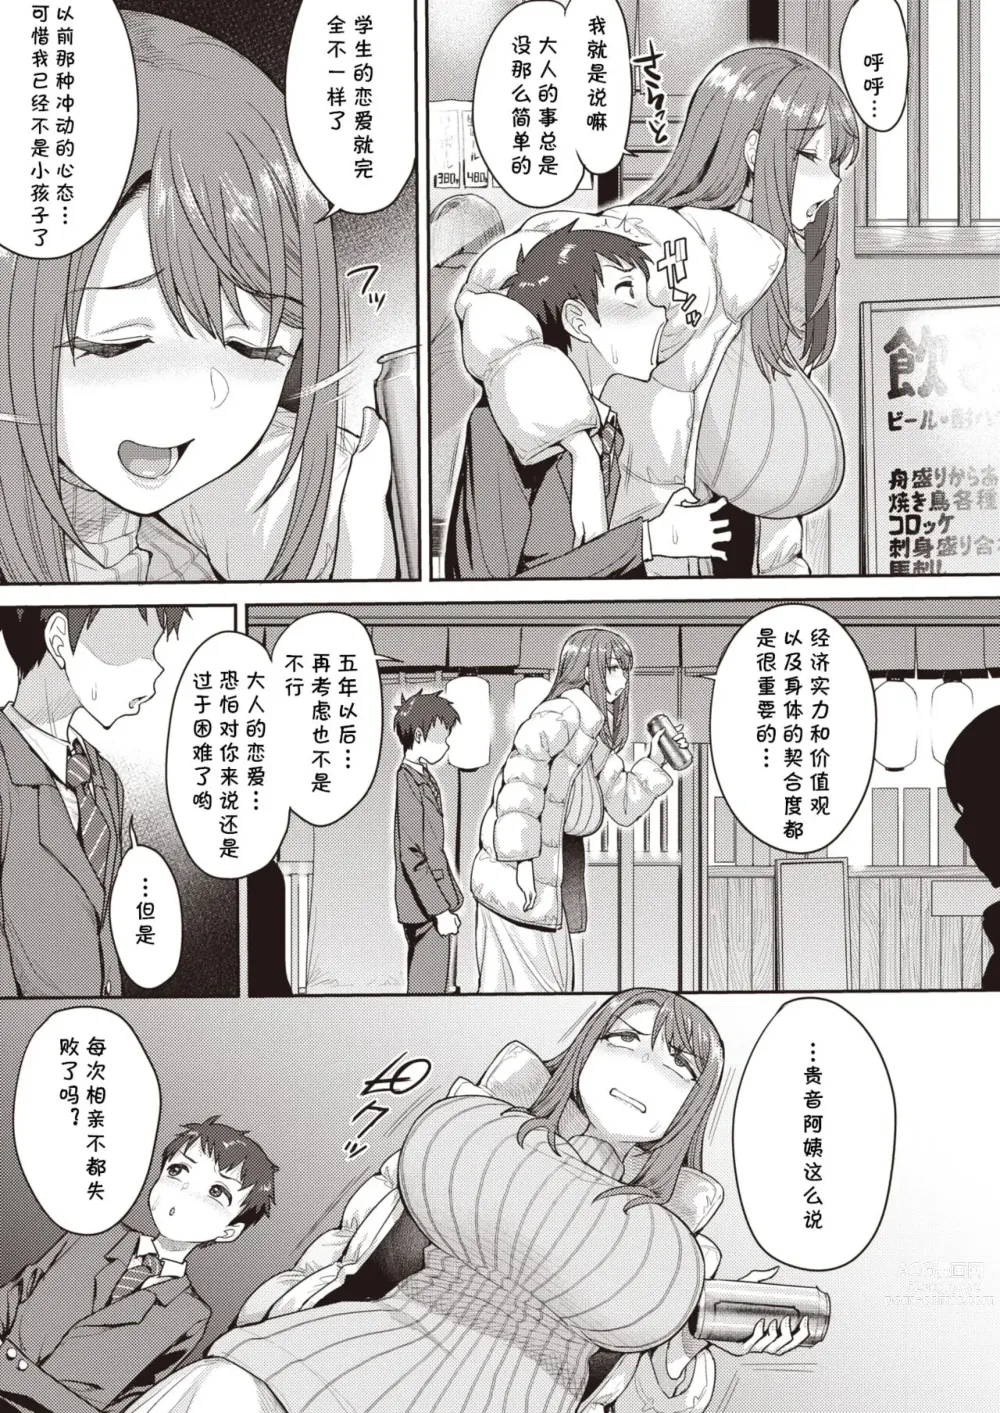 Page 2 of manga 大人の恋愛テクニック